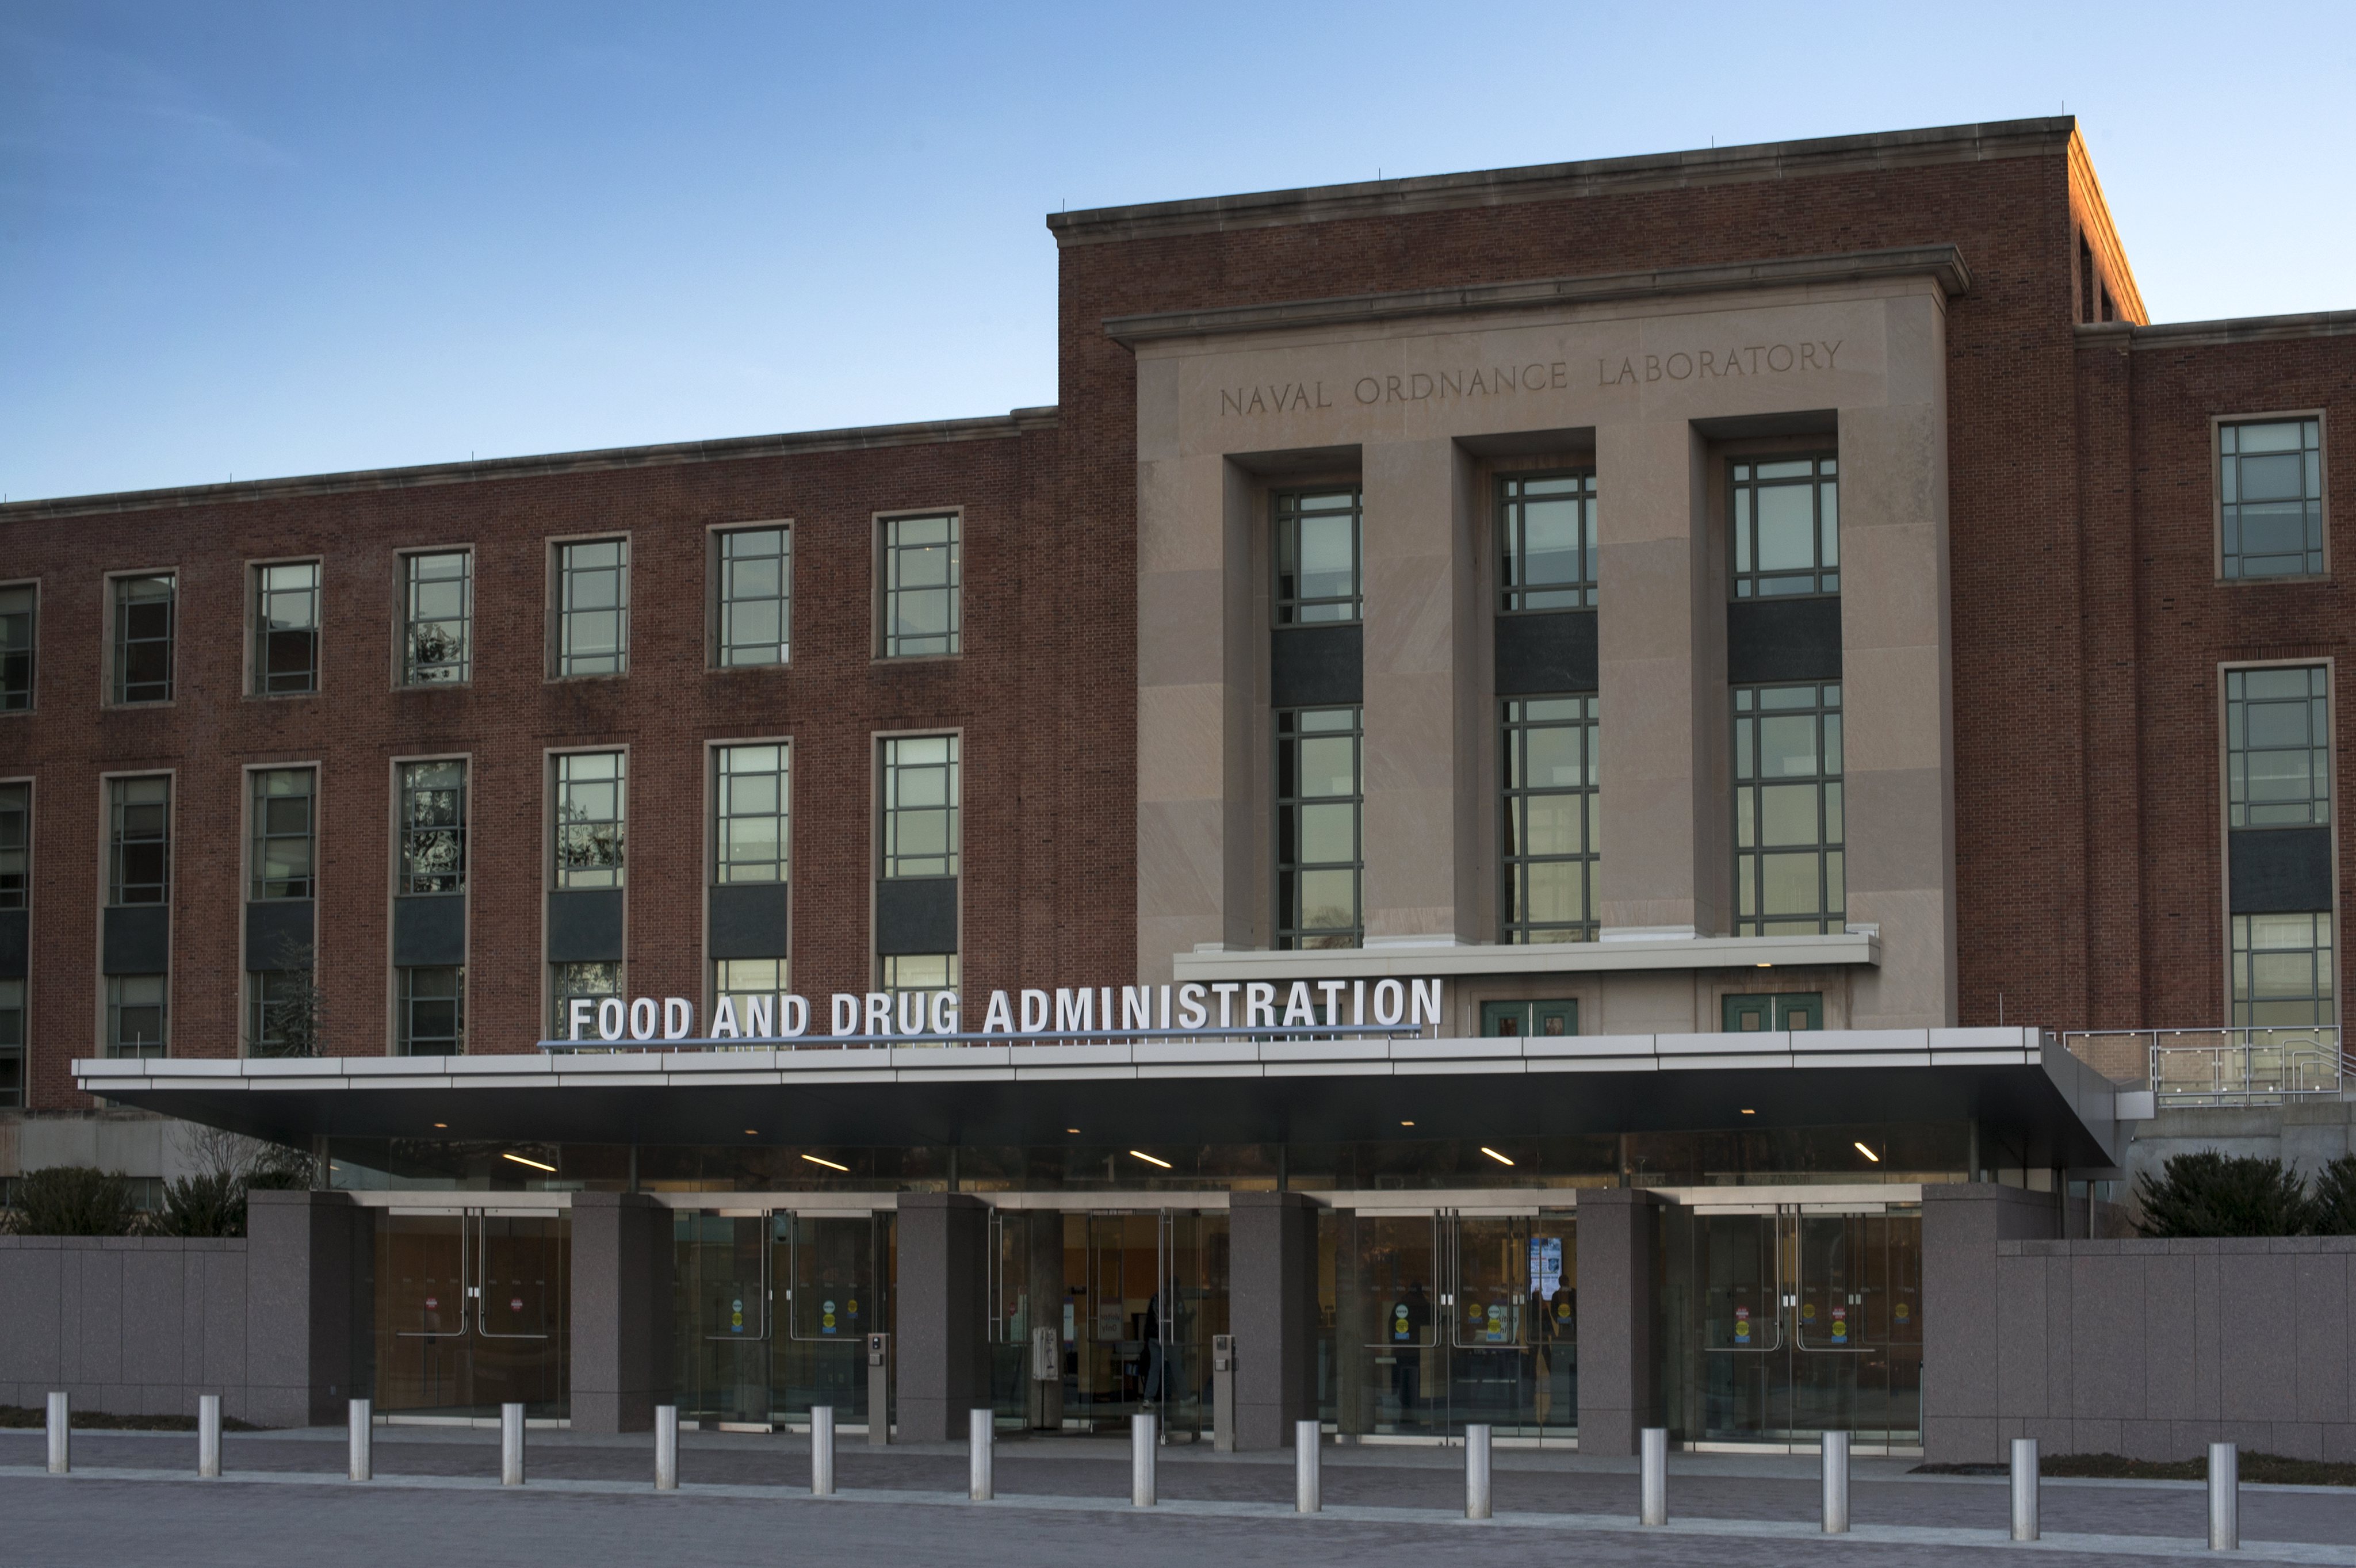 Food and Drug Administration Building